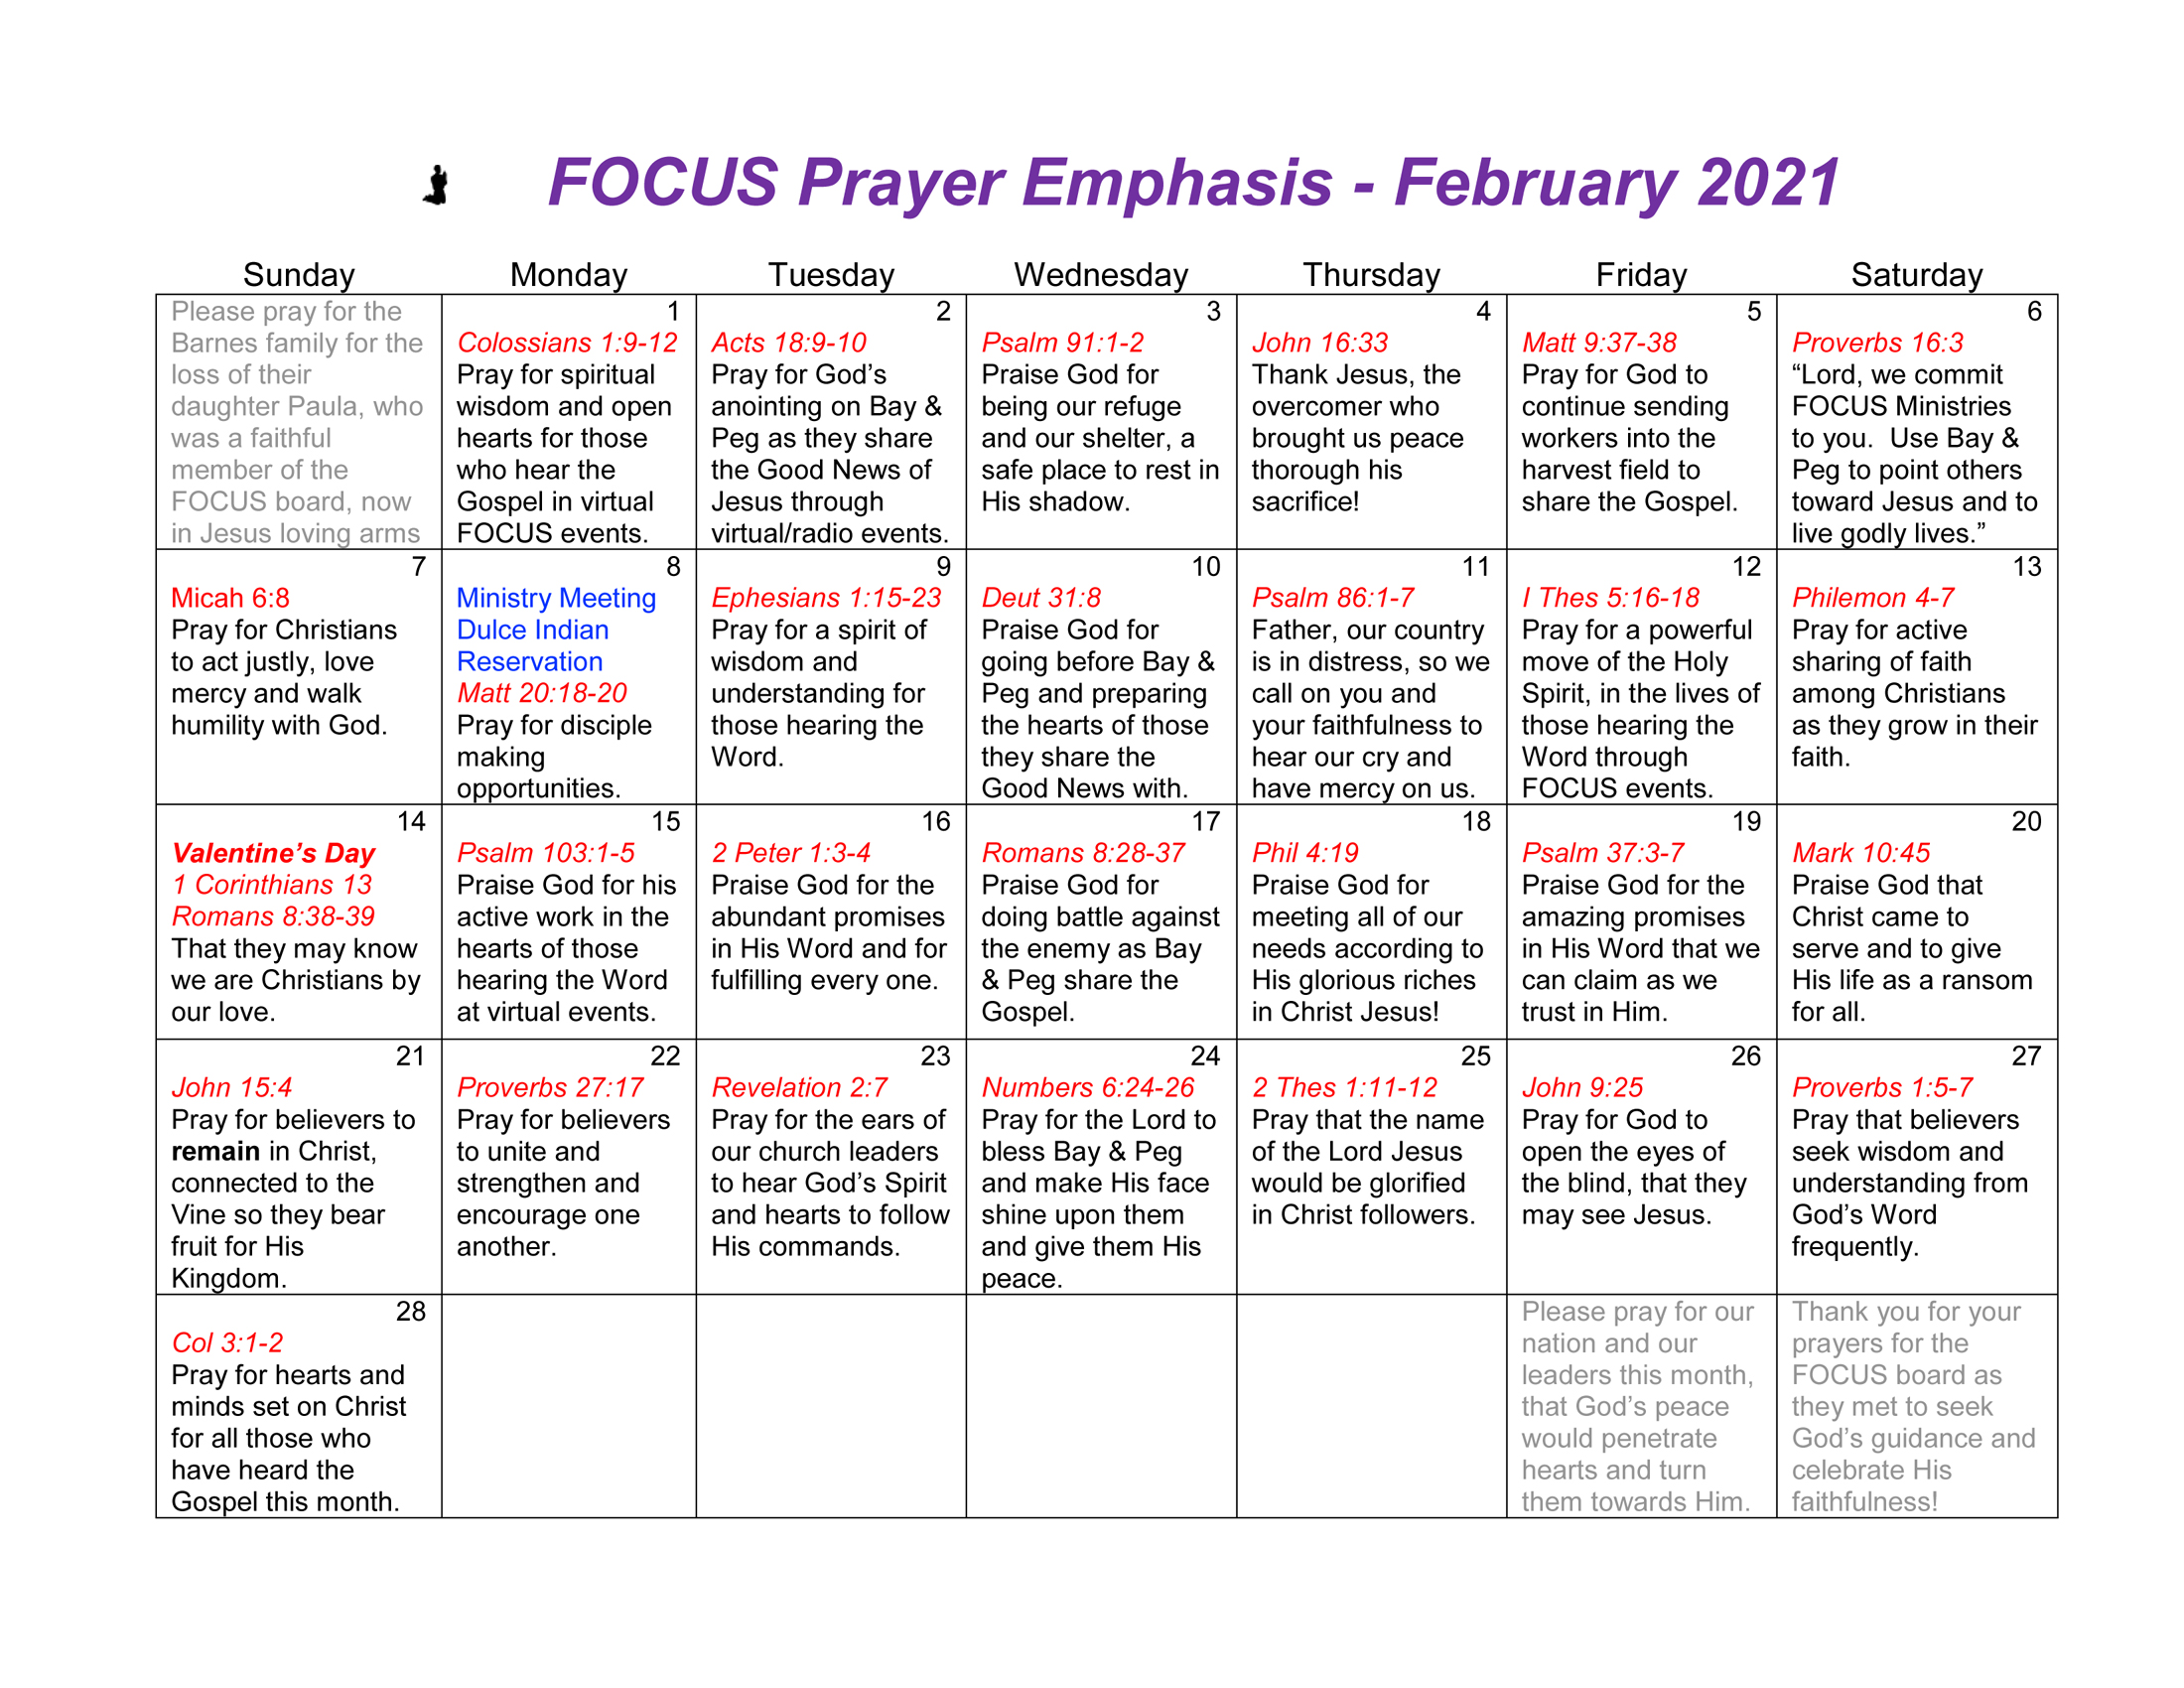 Focus Prayer Calendar Feb 2021 Focus Ministries